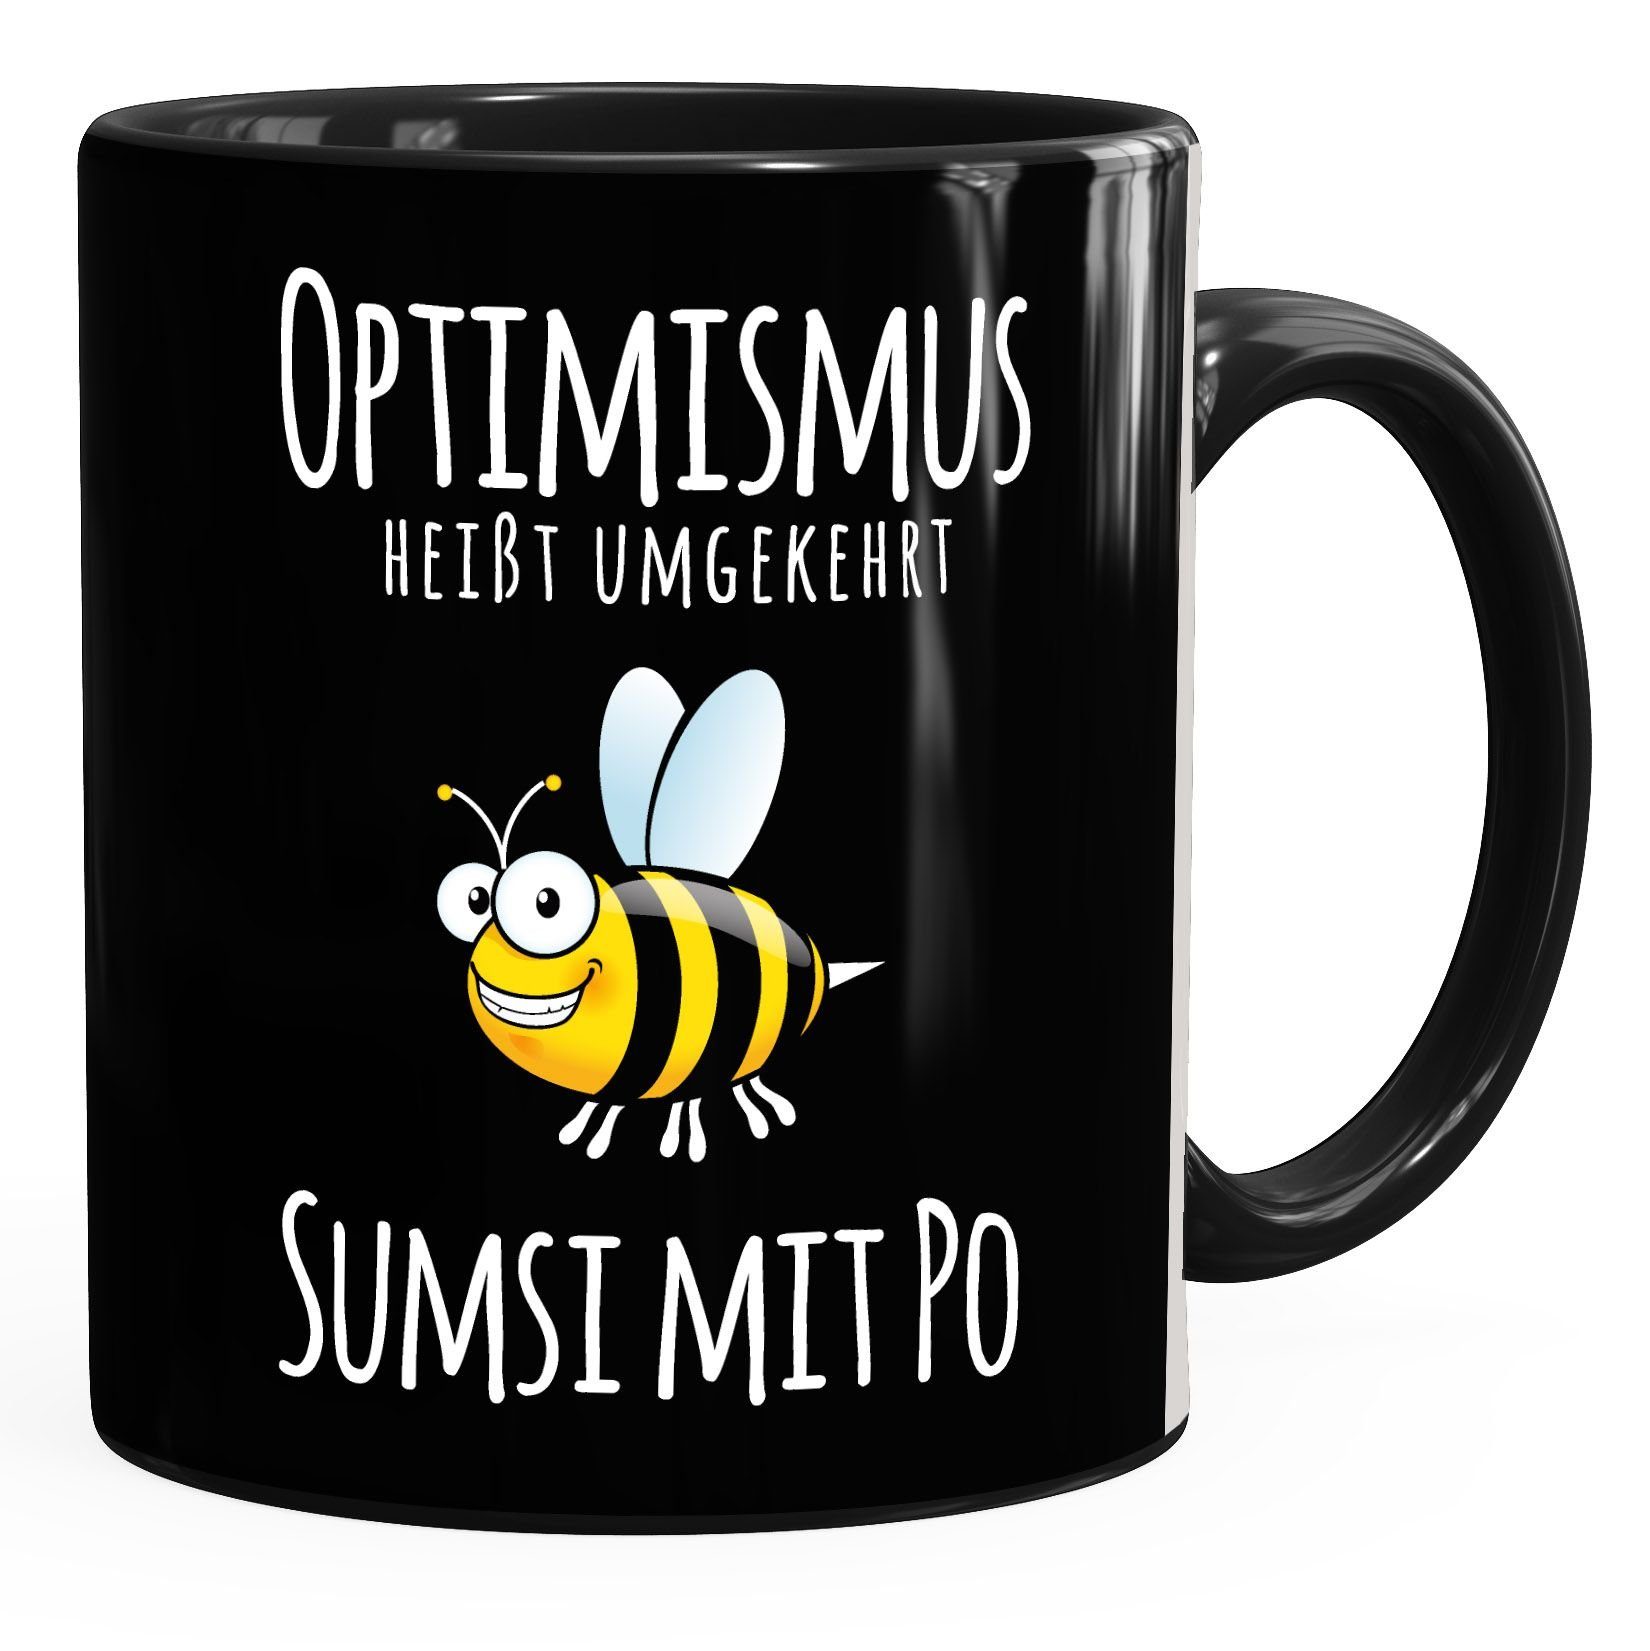 MoonWorks Tasse Kaffee-Tasse Spruch Optimismus heisst umgekehrt Sumsi mit Po Bürotasse Motiv Biene MoonWorks®, Keramik schwarz